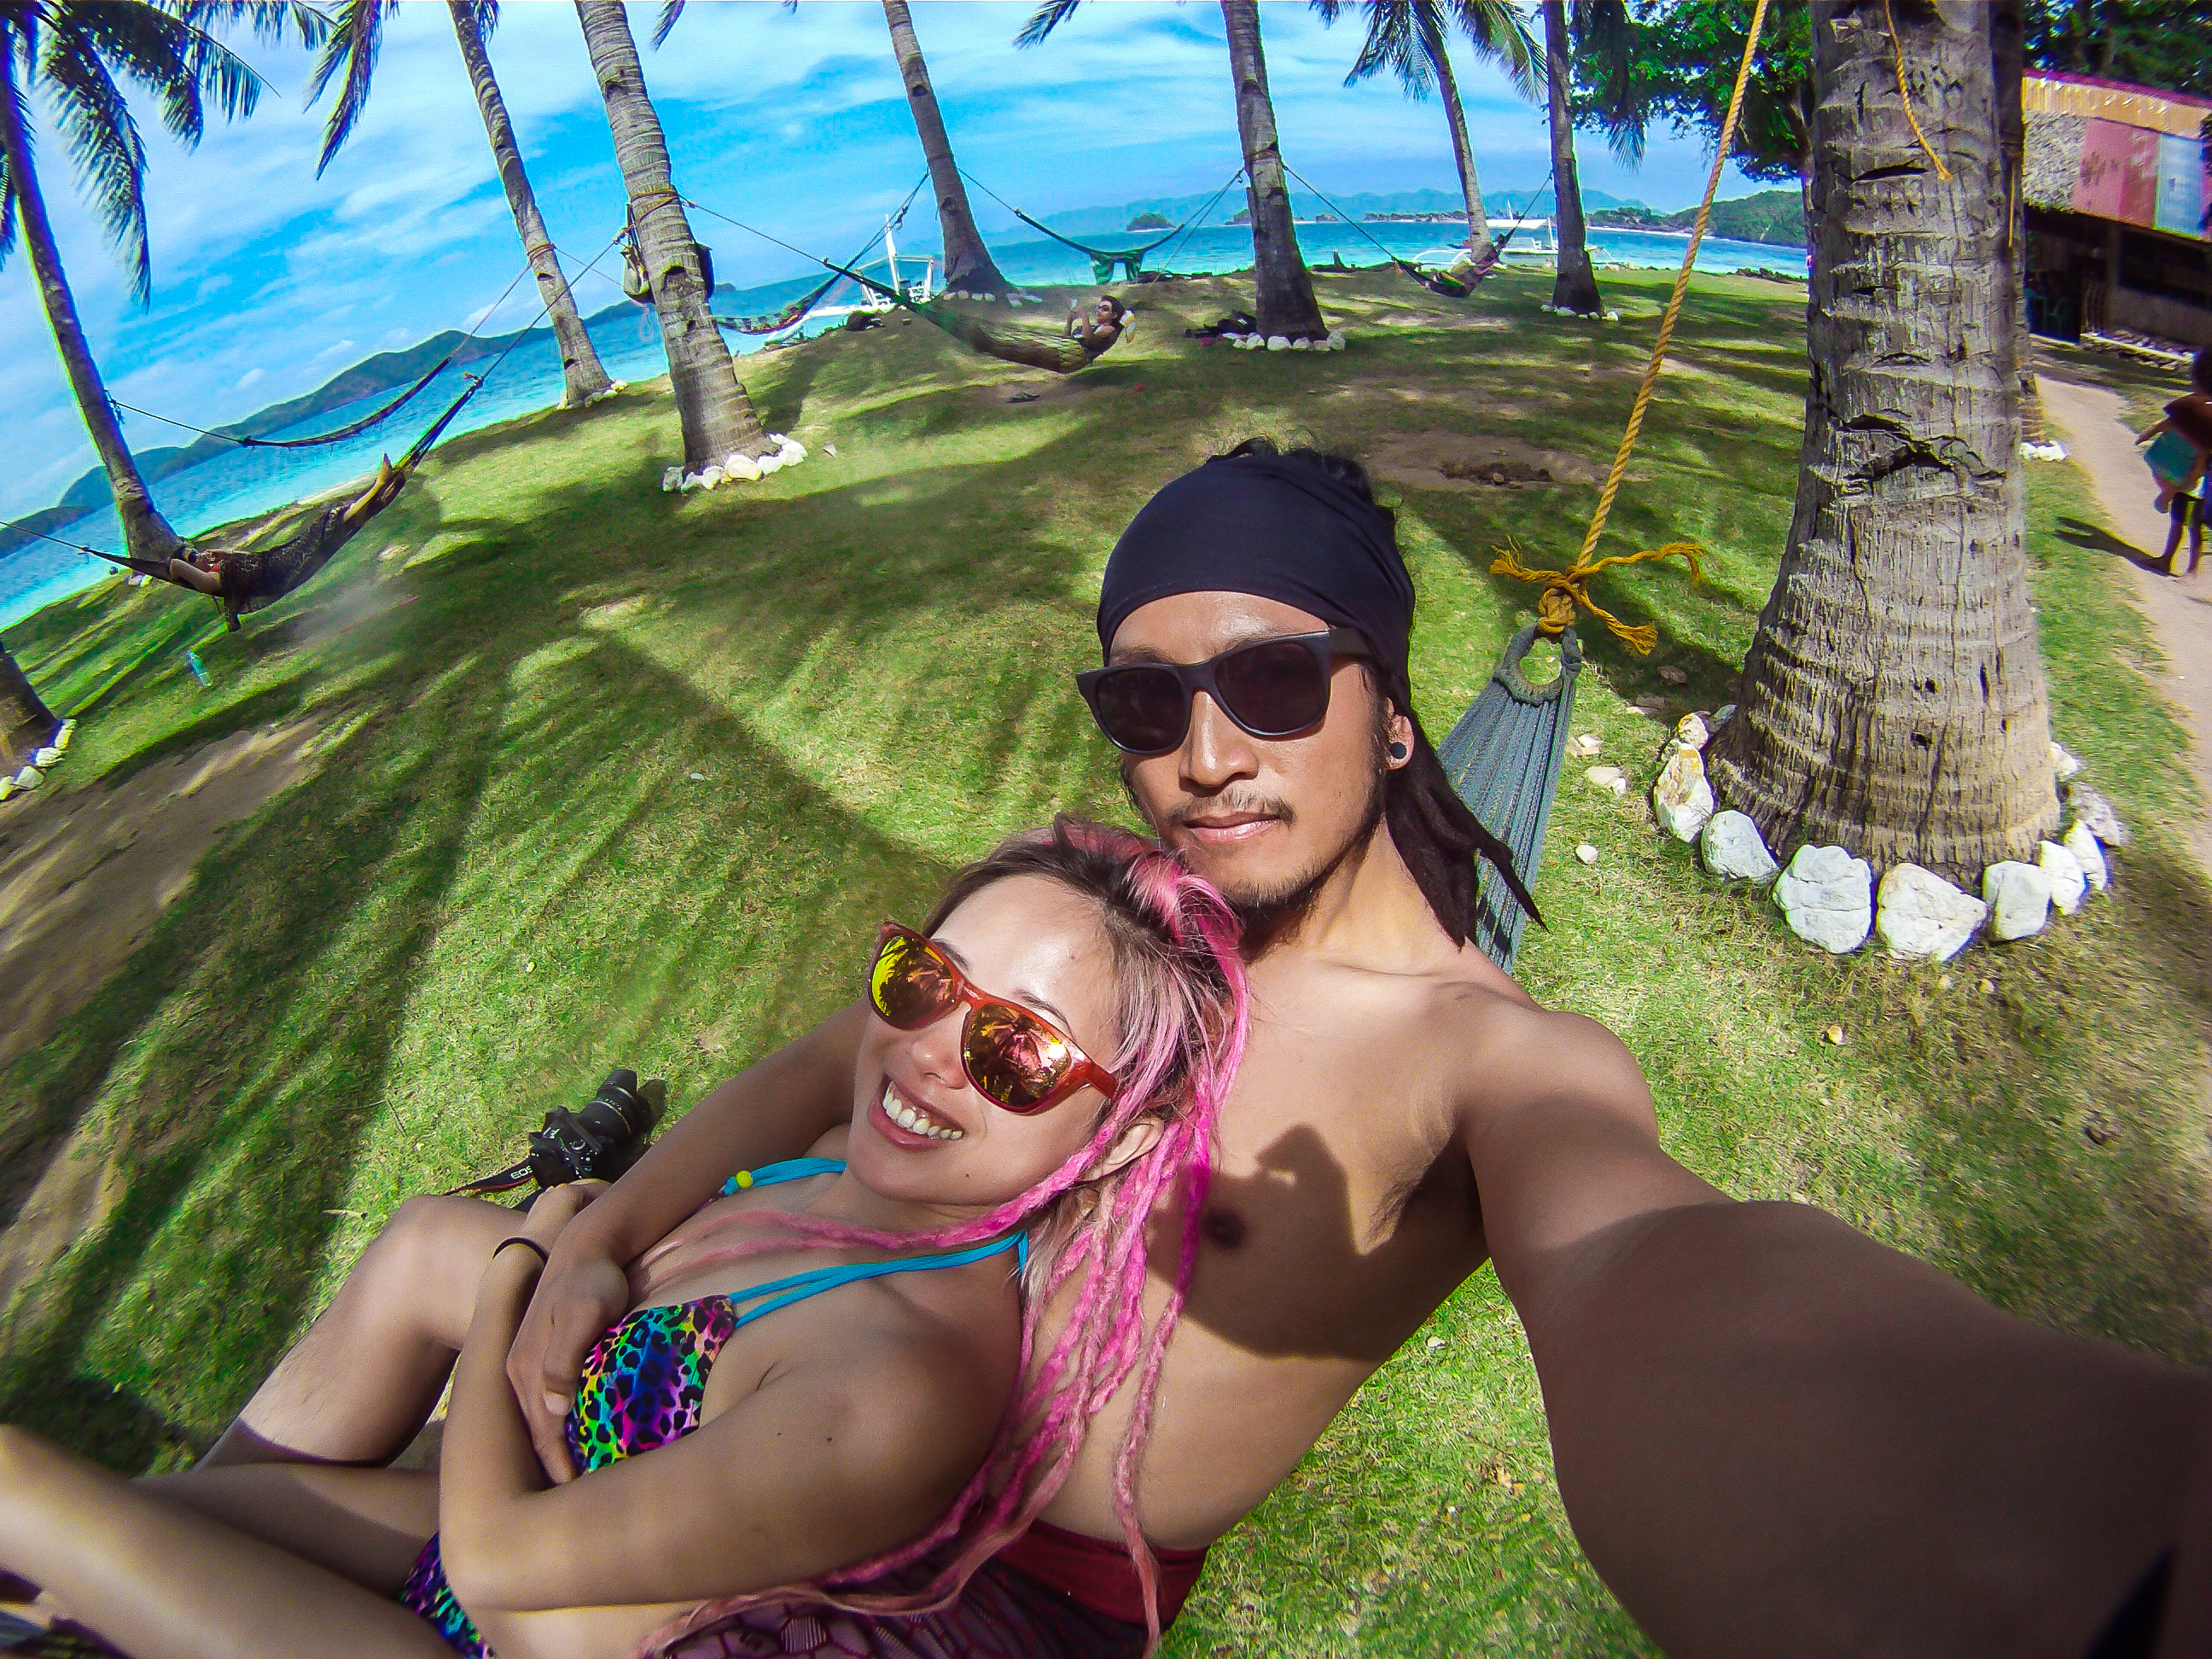 Ray and Alexis’s Coron, Palawan Island Adventure